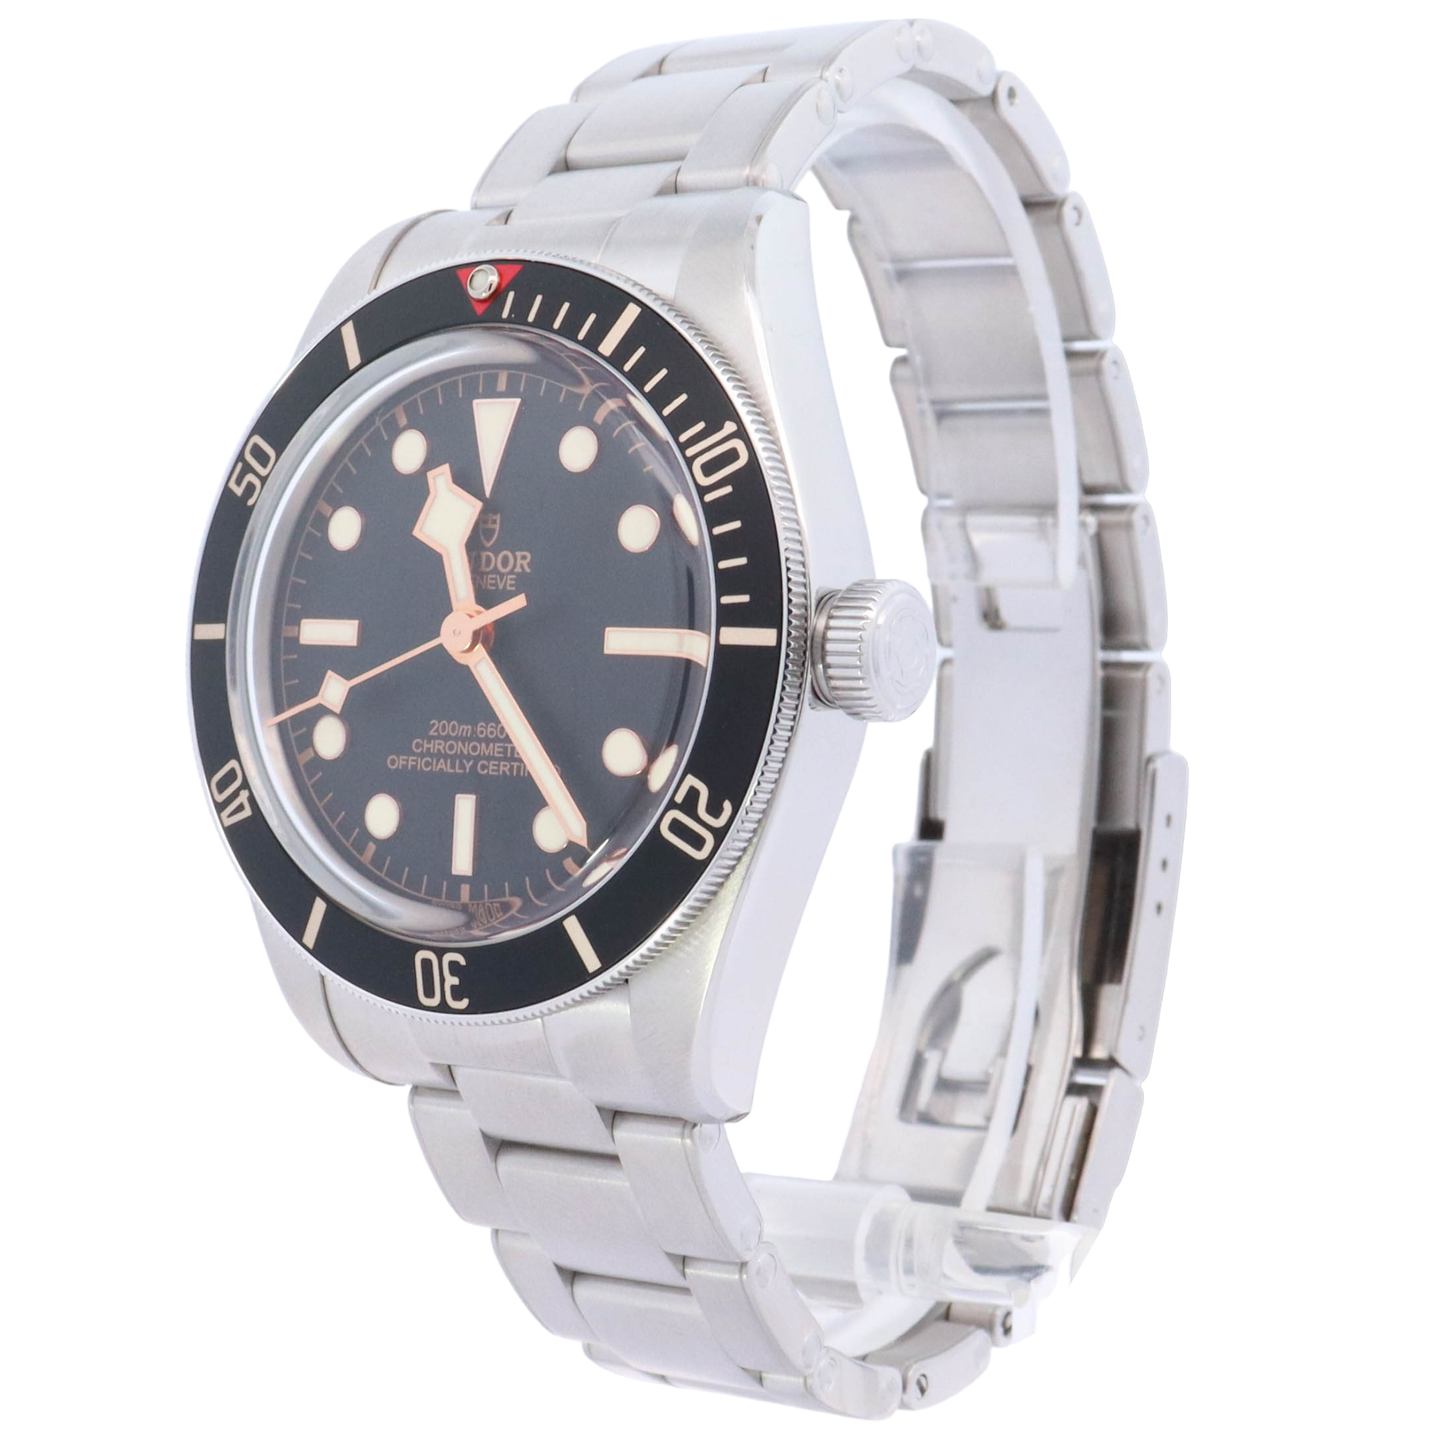 Tudor Black Bay 58 39mm Stainless Steel Black Dot Dial Watch Reference# 79030N - Happy Jewelers Fine Jewelry Lifetime Warranty